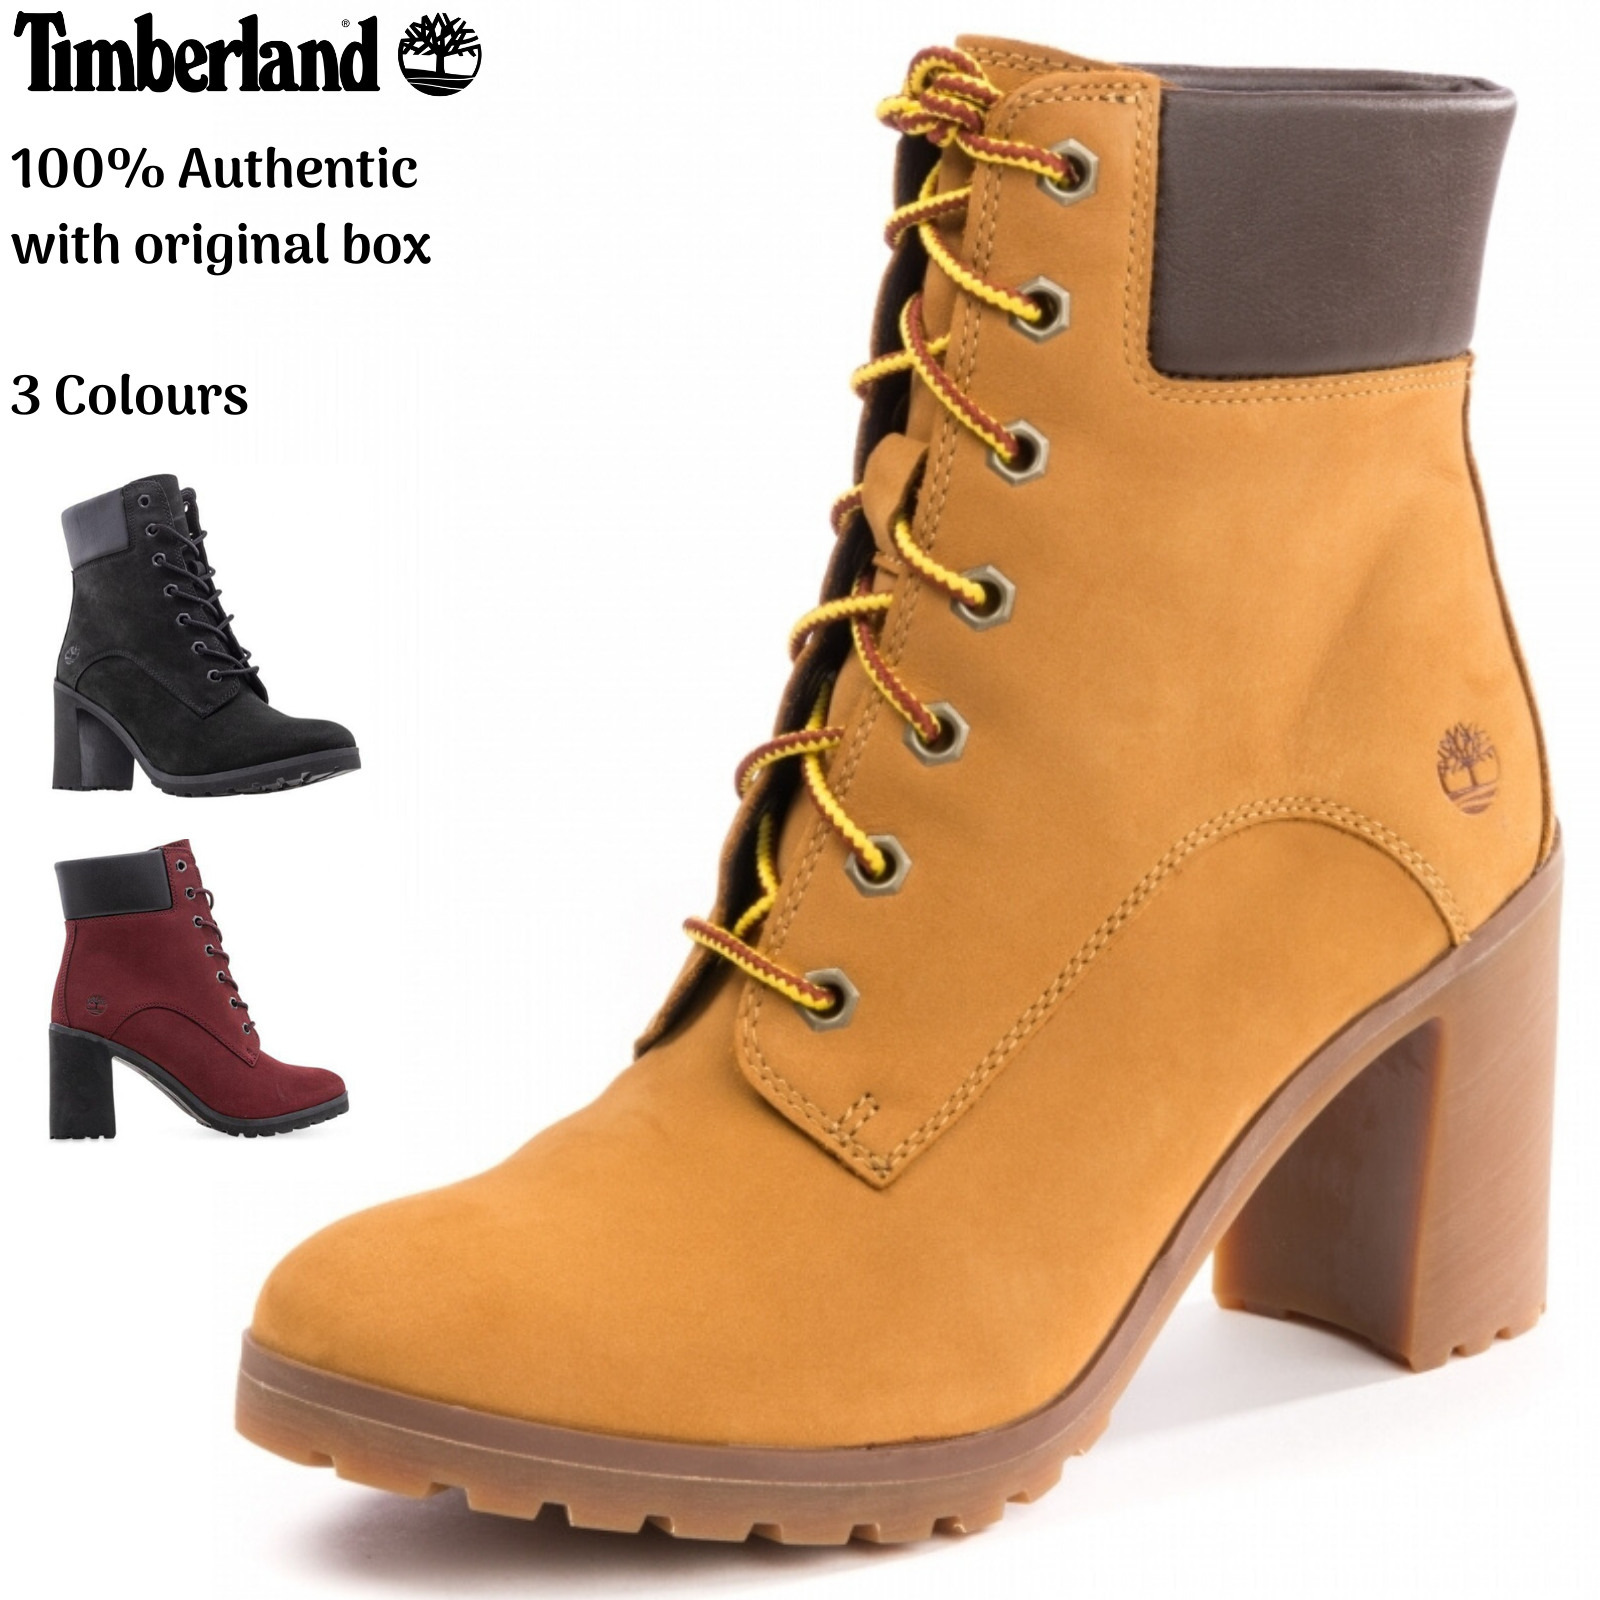 timberland boots allington